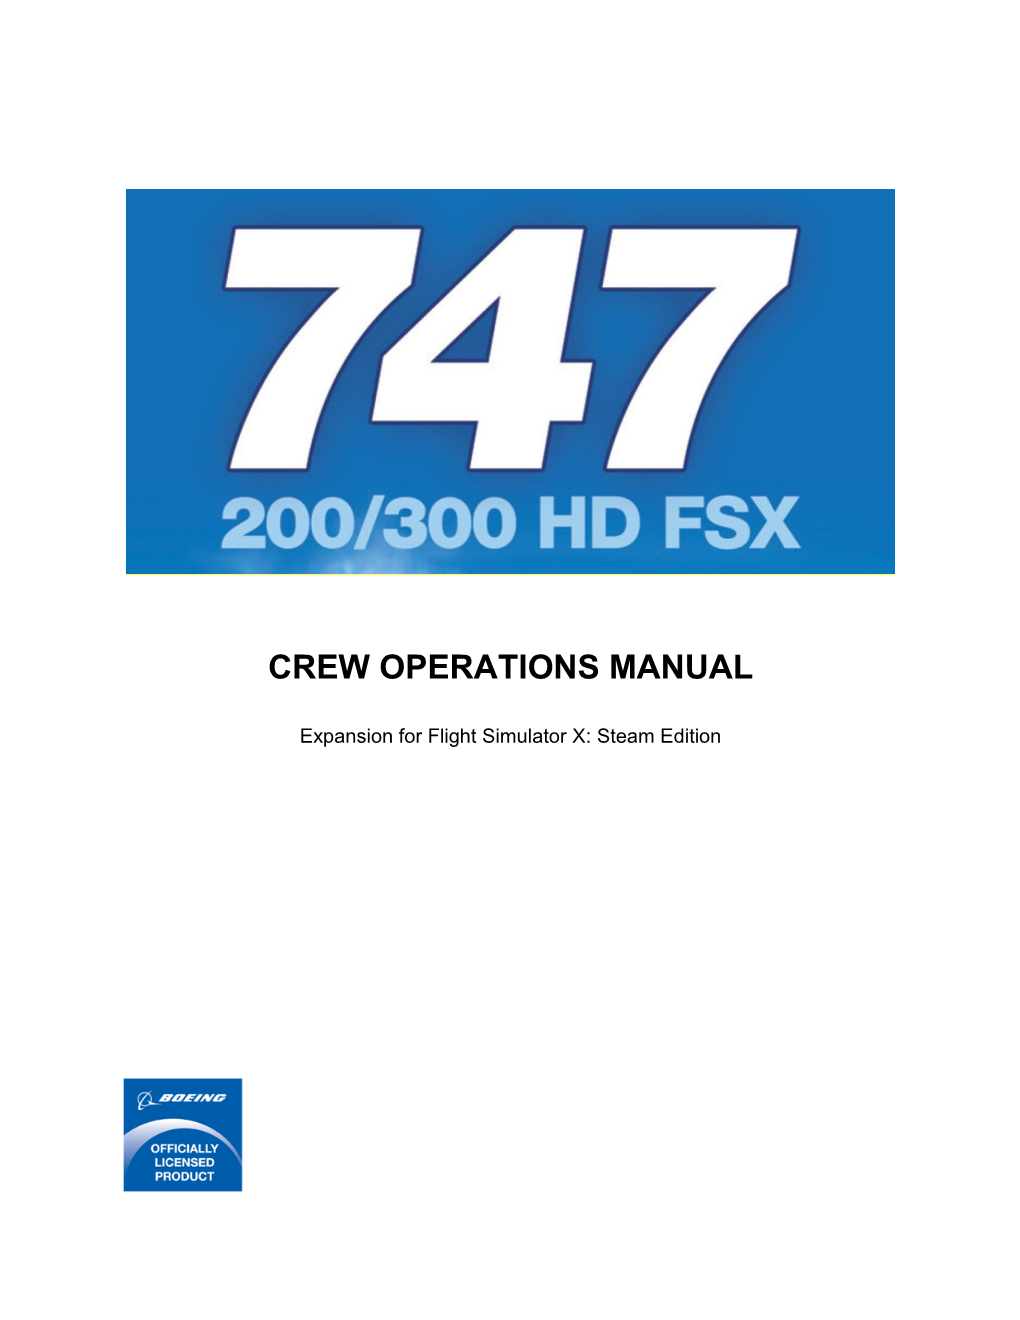 Crew Operations Manual